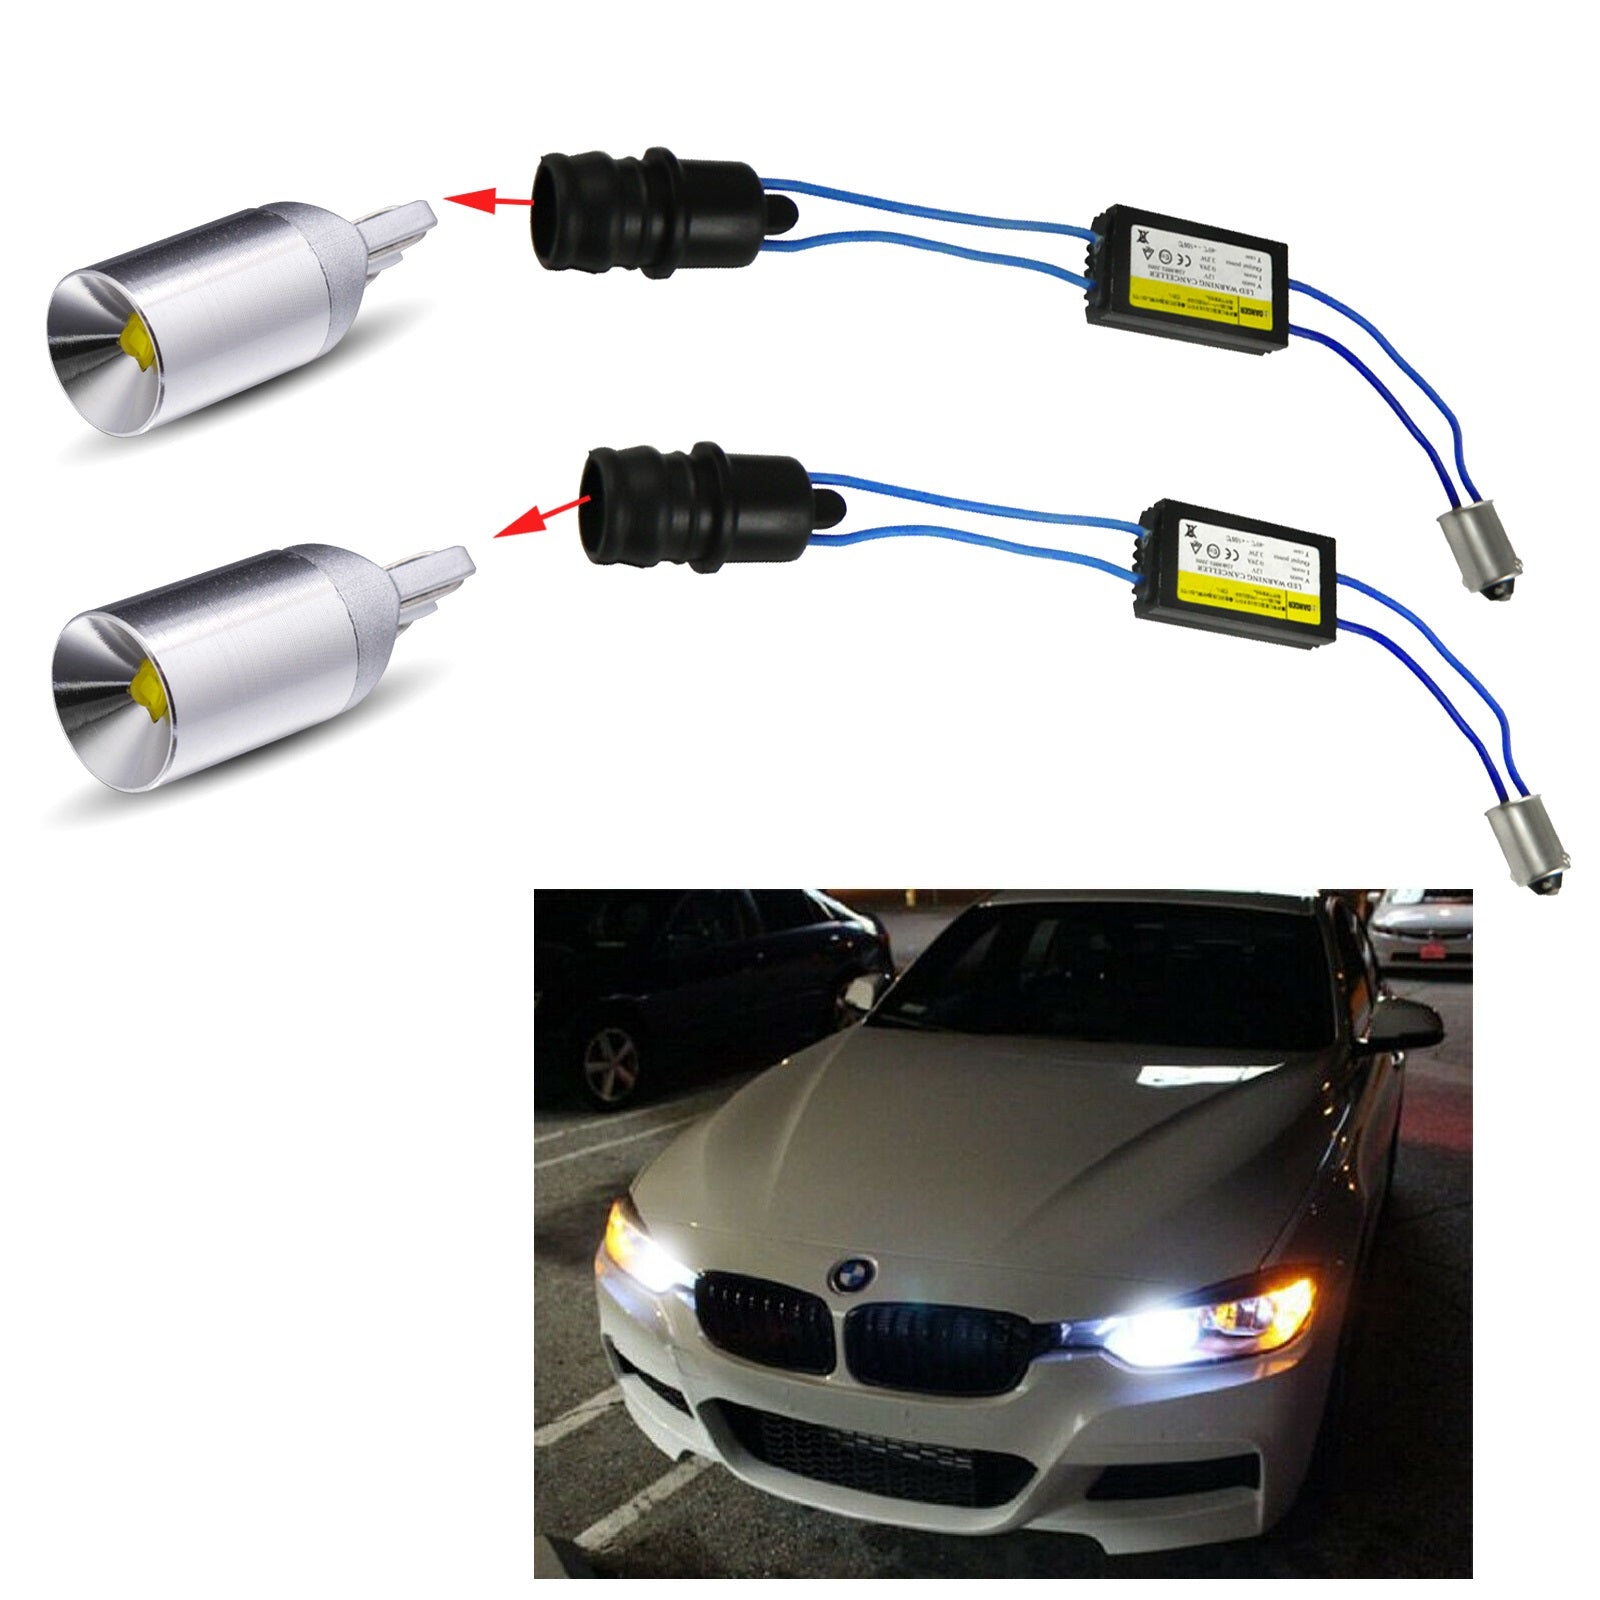 2x 6000K Xenon White CAN-Bus Error Free LED Light Bulb for BMW F30 3 S